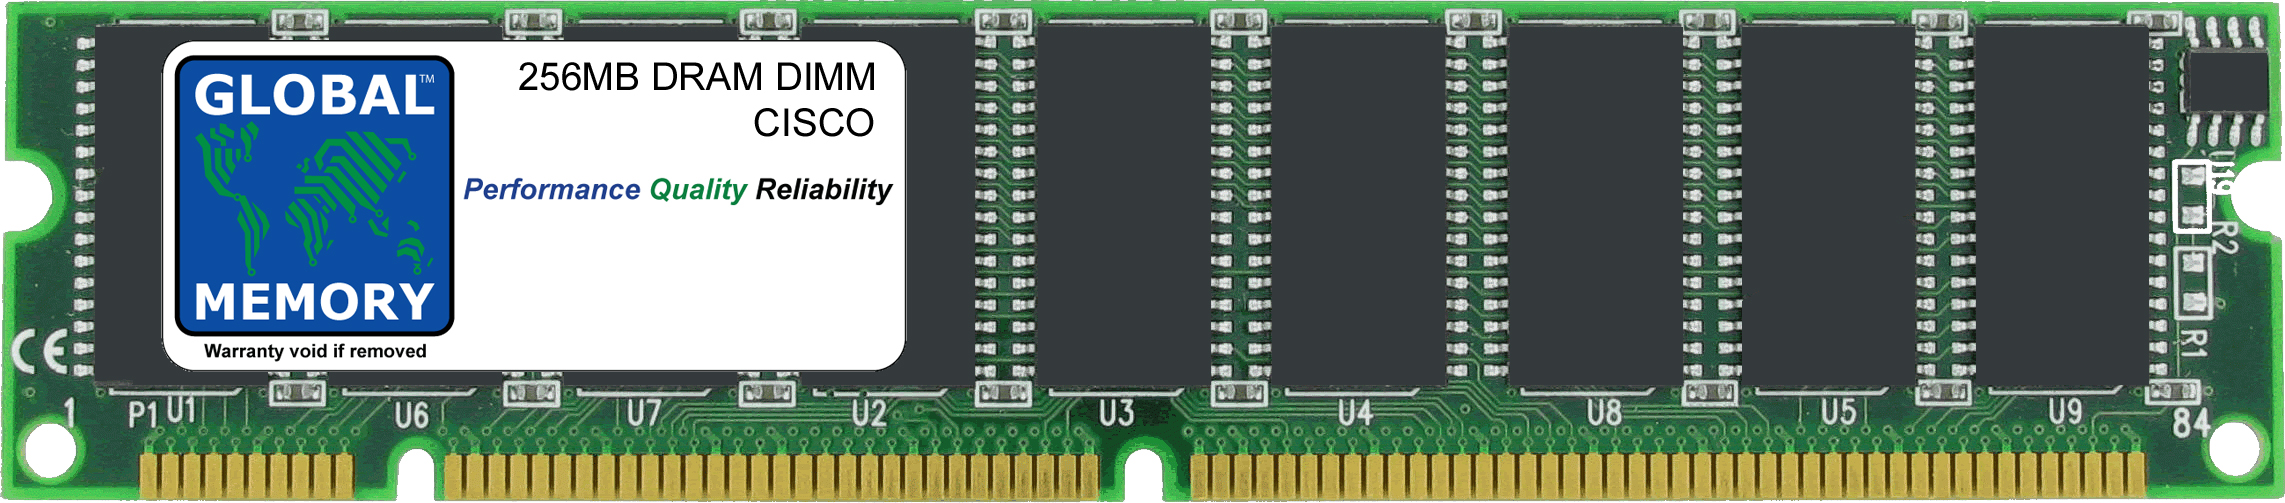 256MB DRAM DIMM MEMORY RAM FOR CISCO AS5400 / AS5400HPX UNIVERSAL GATEWAY (MEM-256M-AS54) - Click Image to Close